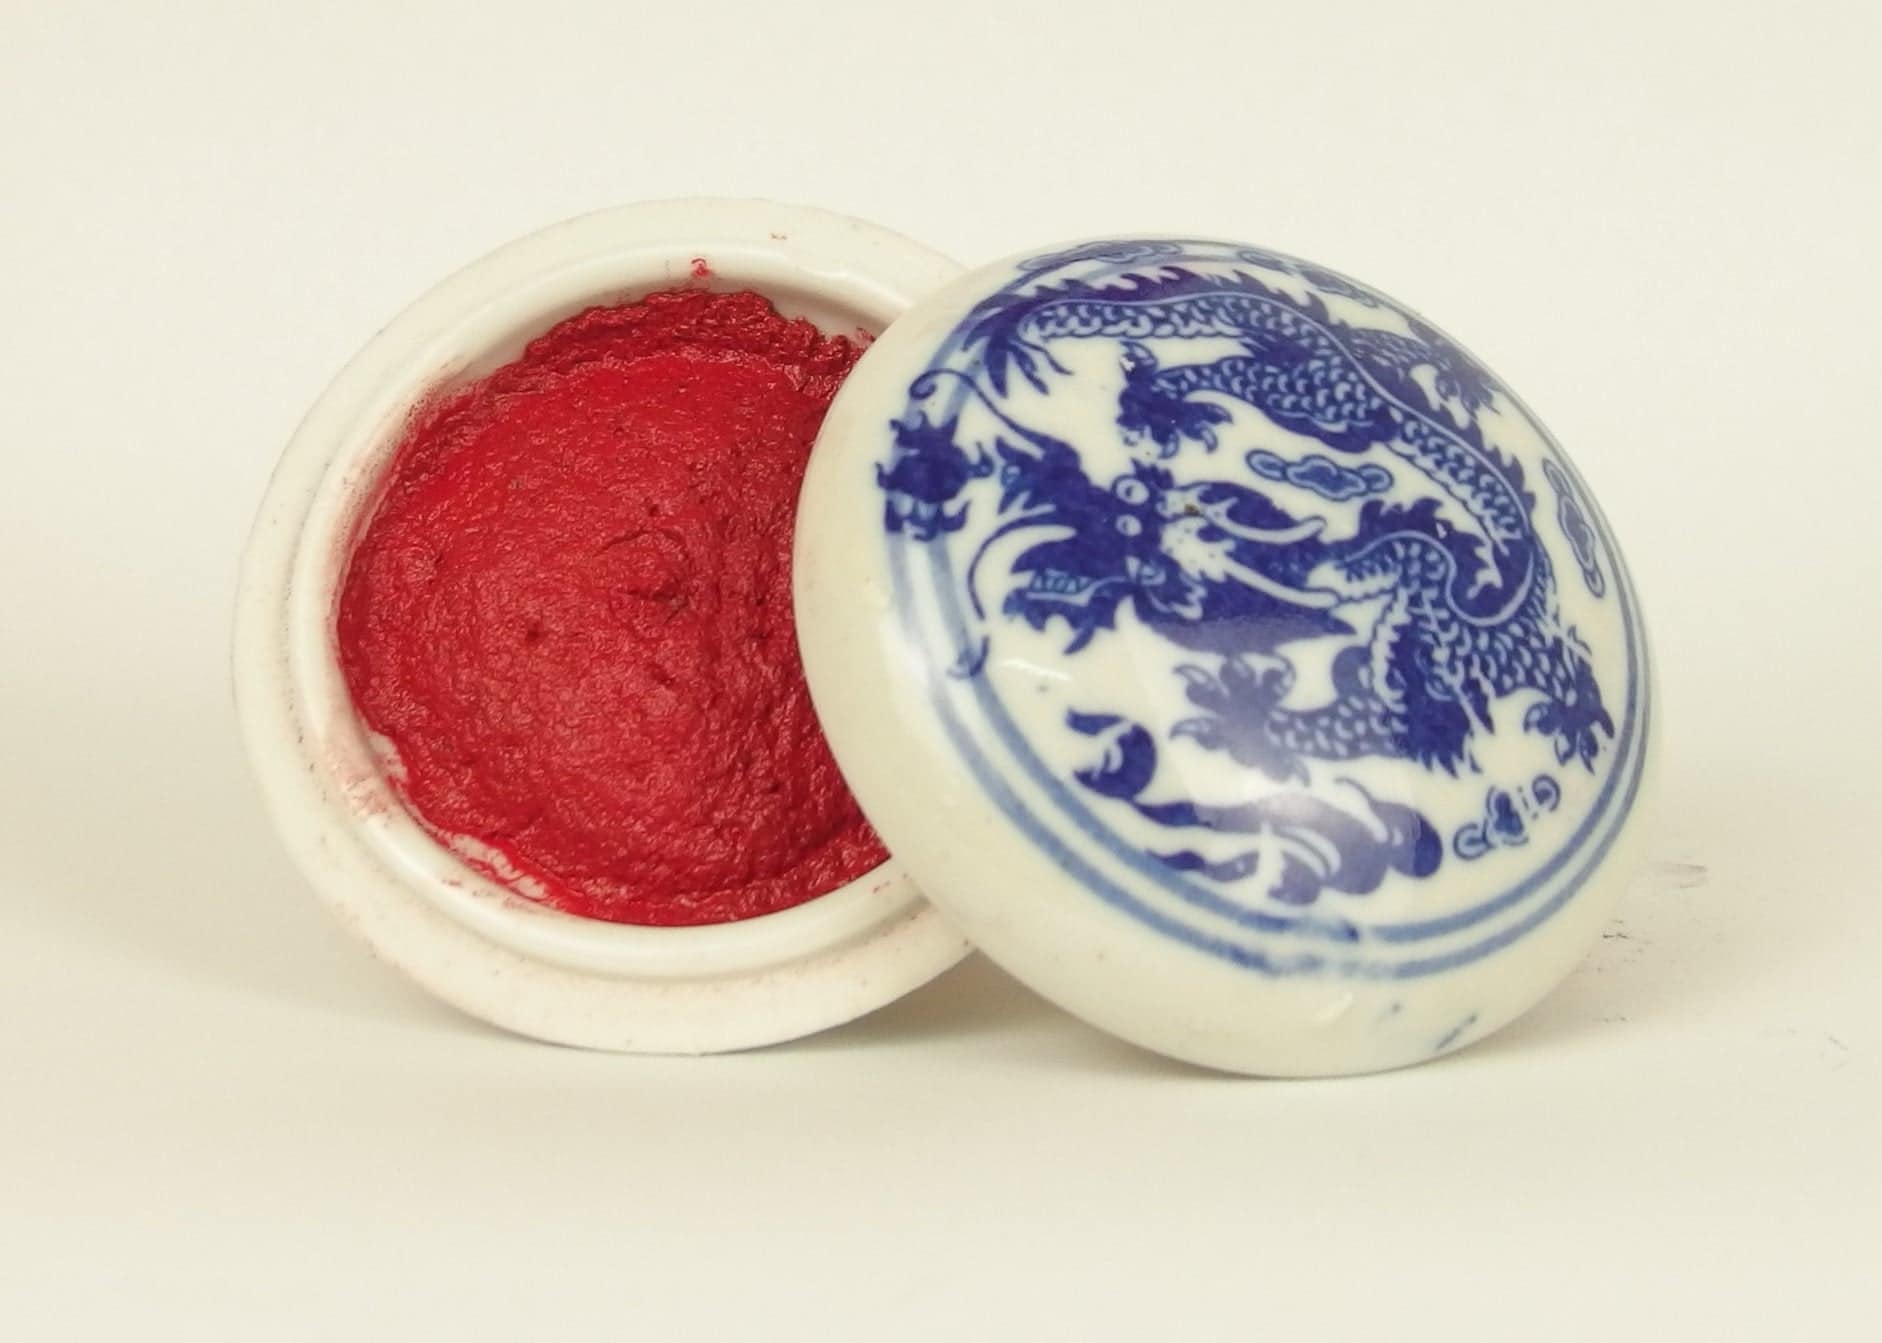 Red Calligraphy Ink 36g Round China Yinni Paste Stamp Art Crafts Supply Tools 